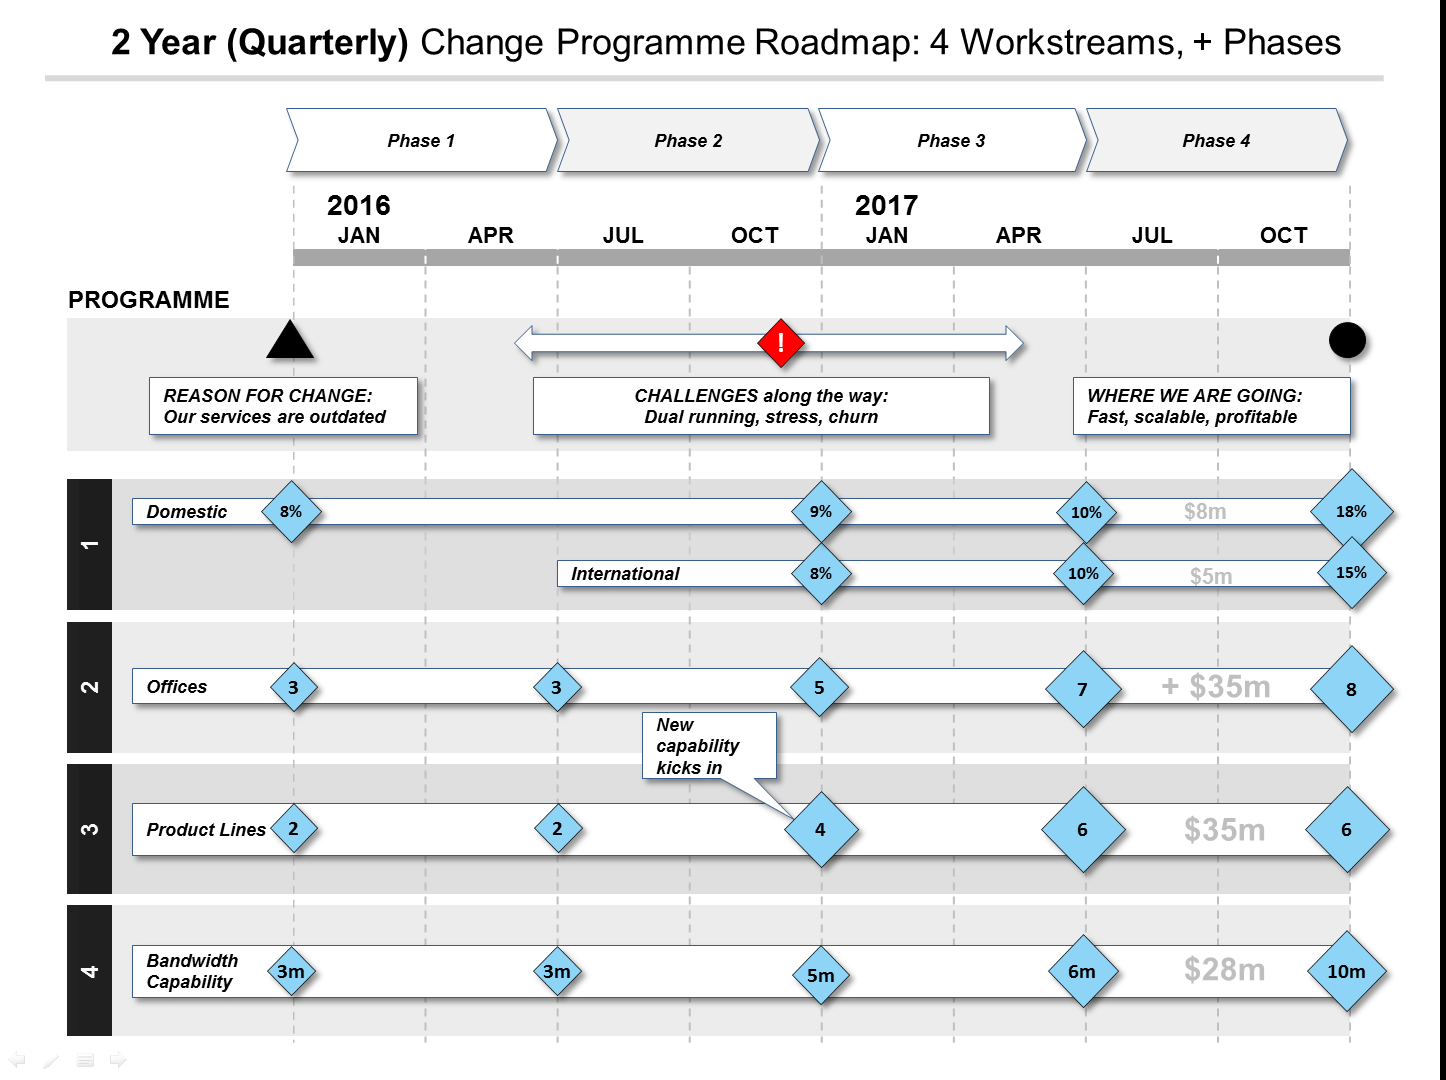 3 Year (Quarterly) Change Programme Roadmap: 4 Workstreams